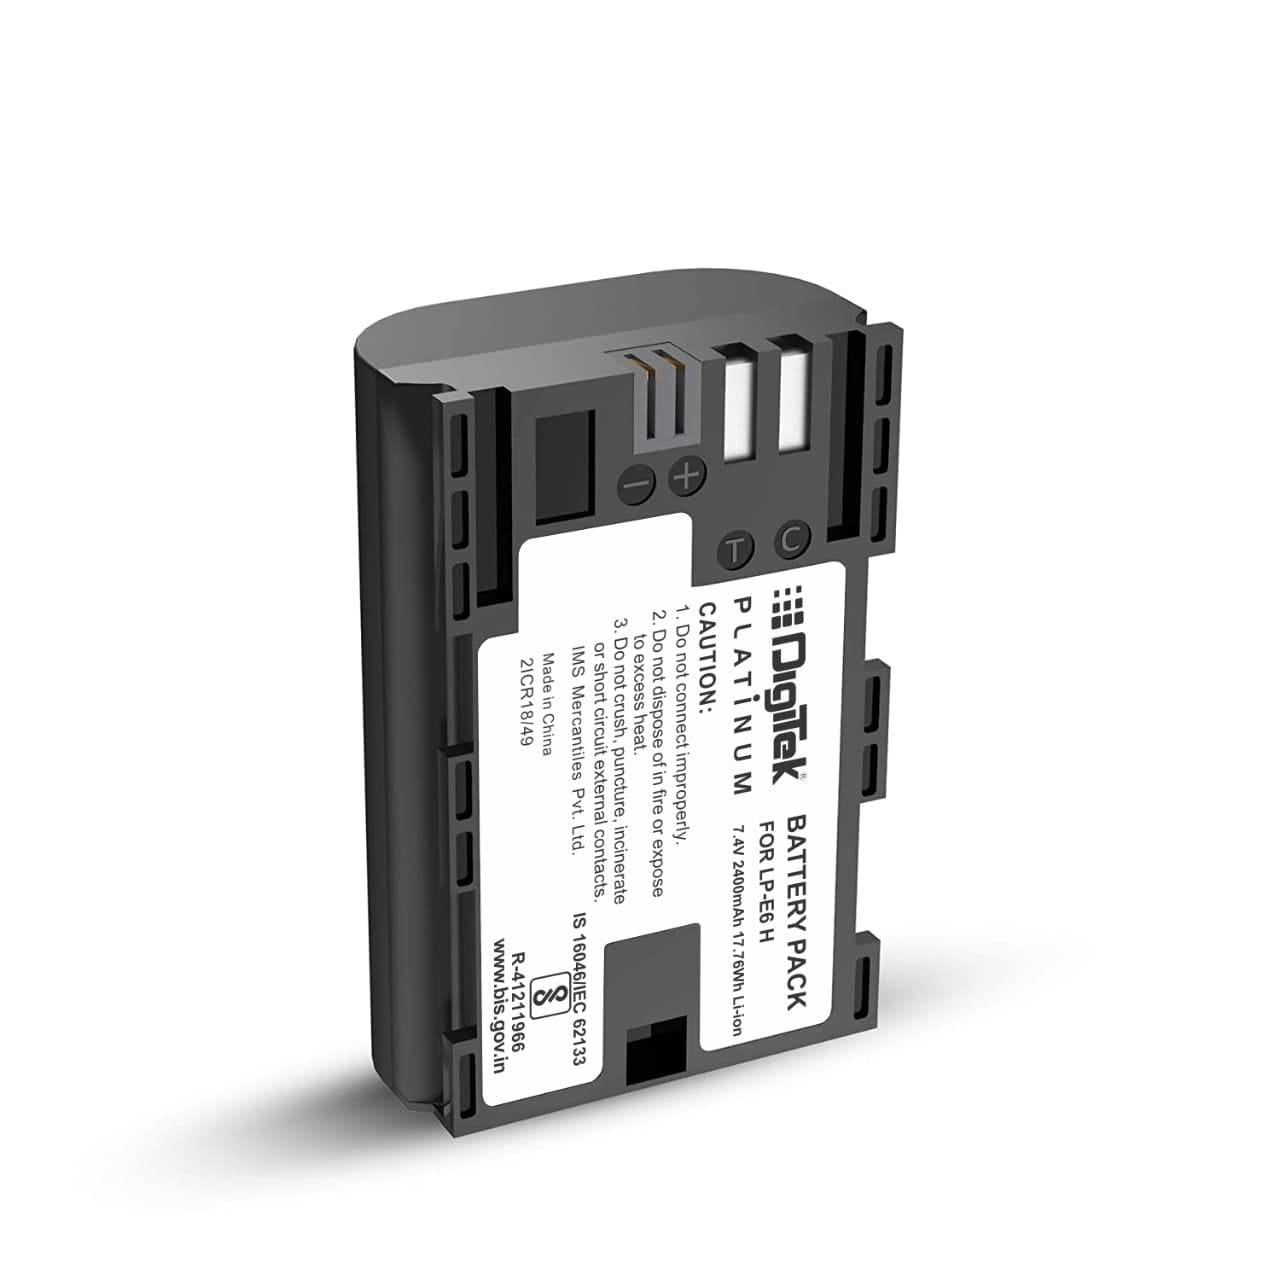 Digitek (LP-E6 H Platinum) 2400mAh Rechargeable Lithium-ion Battery for Canon DSLR Camera | Compatibility - EOS SD Mark III, Mark II, EOS 7D, EOS 6D, 60D, 70D